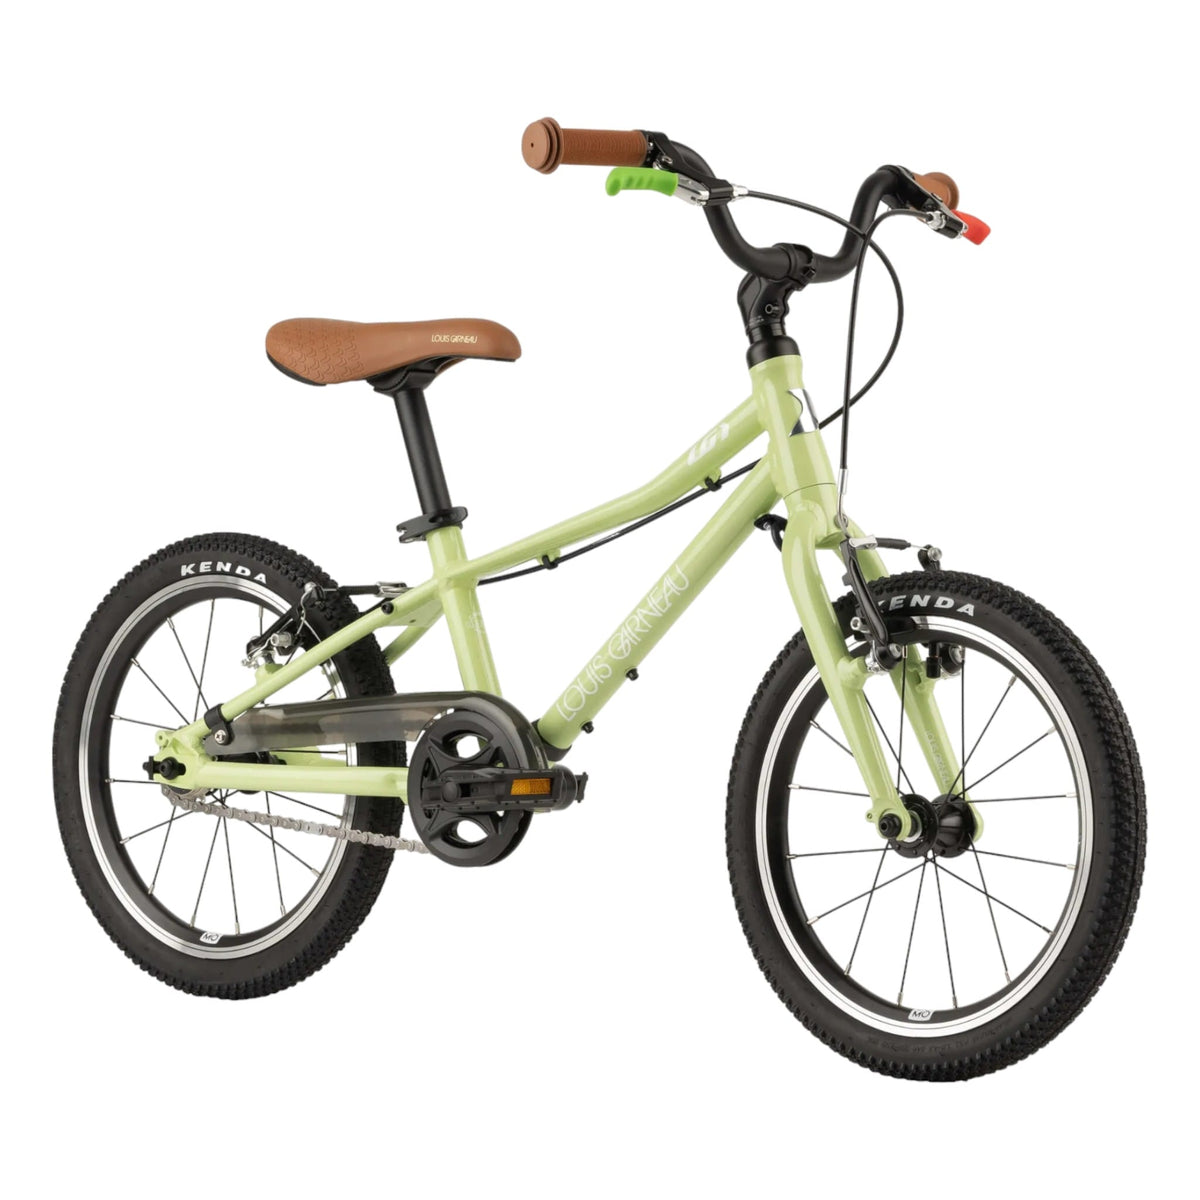 16" Kid’s bike – LG03 Junior Bike